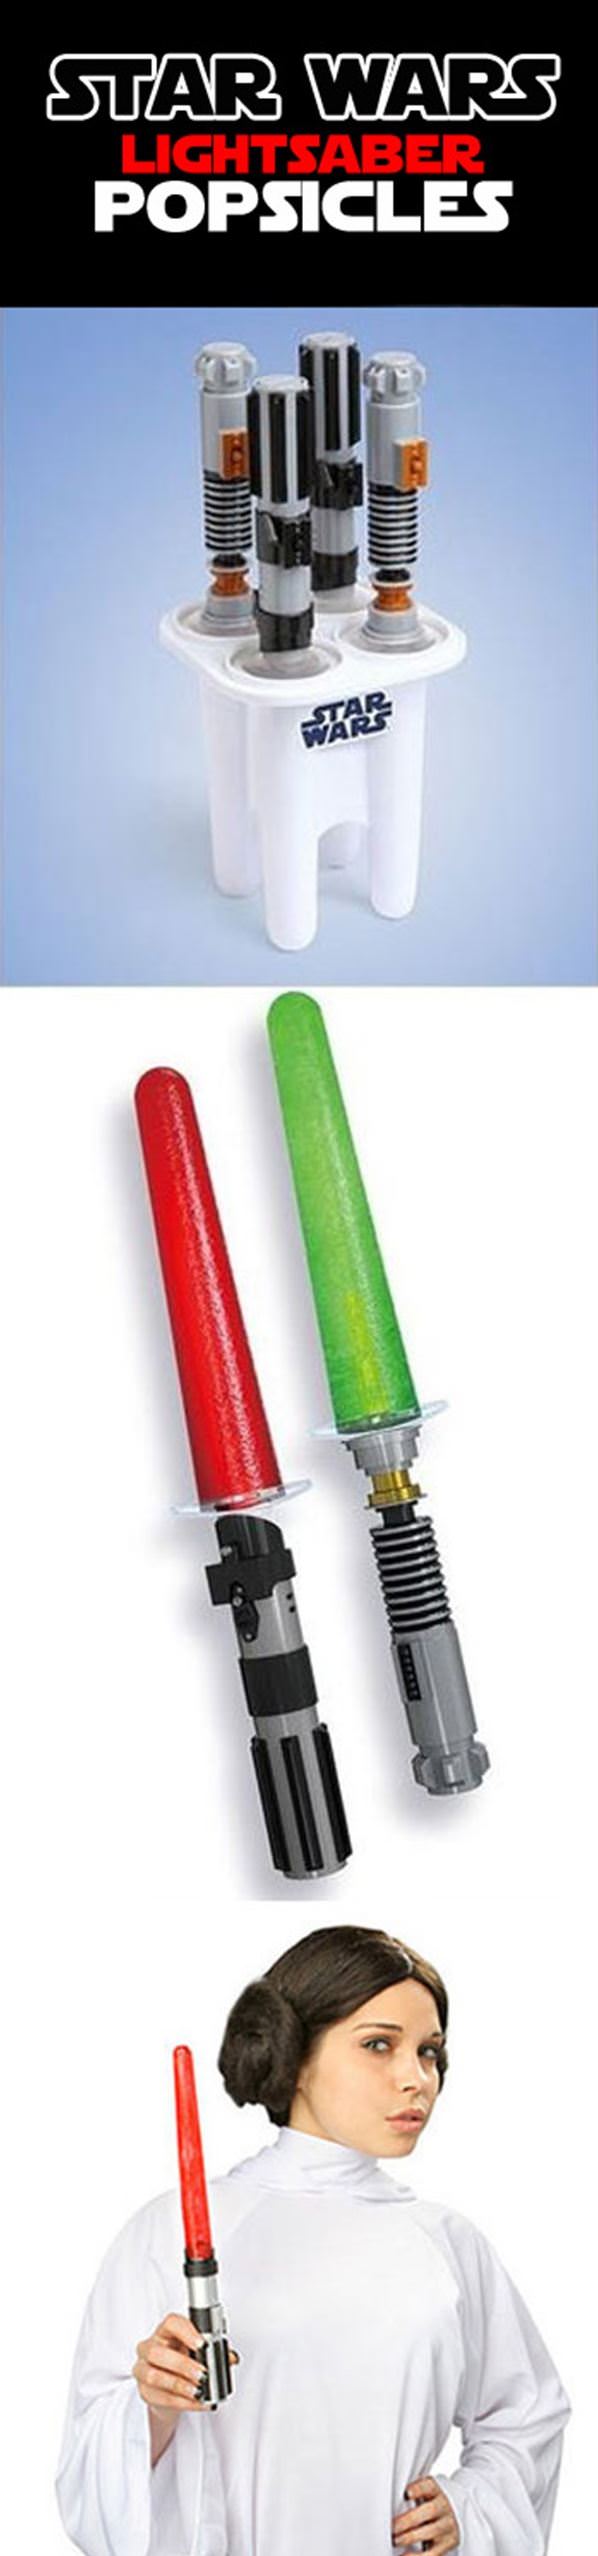 Star Wars Popsicles